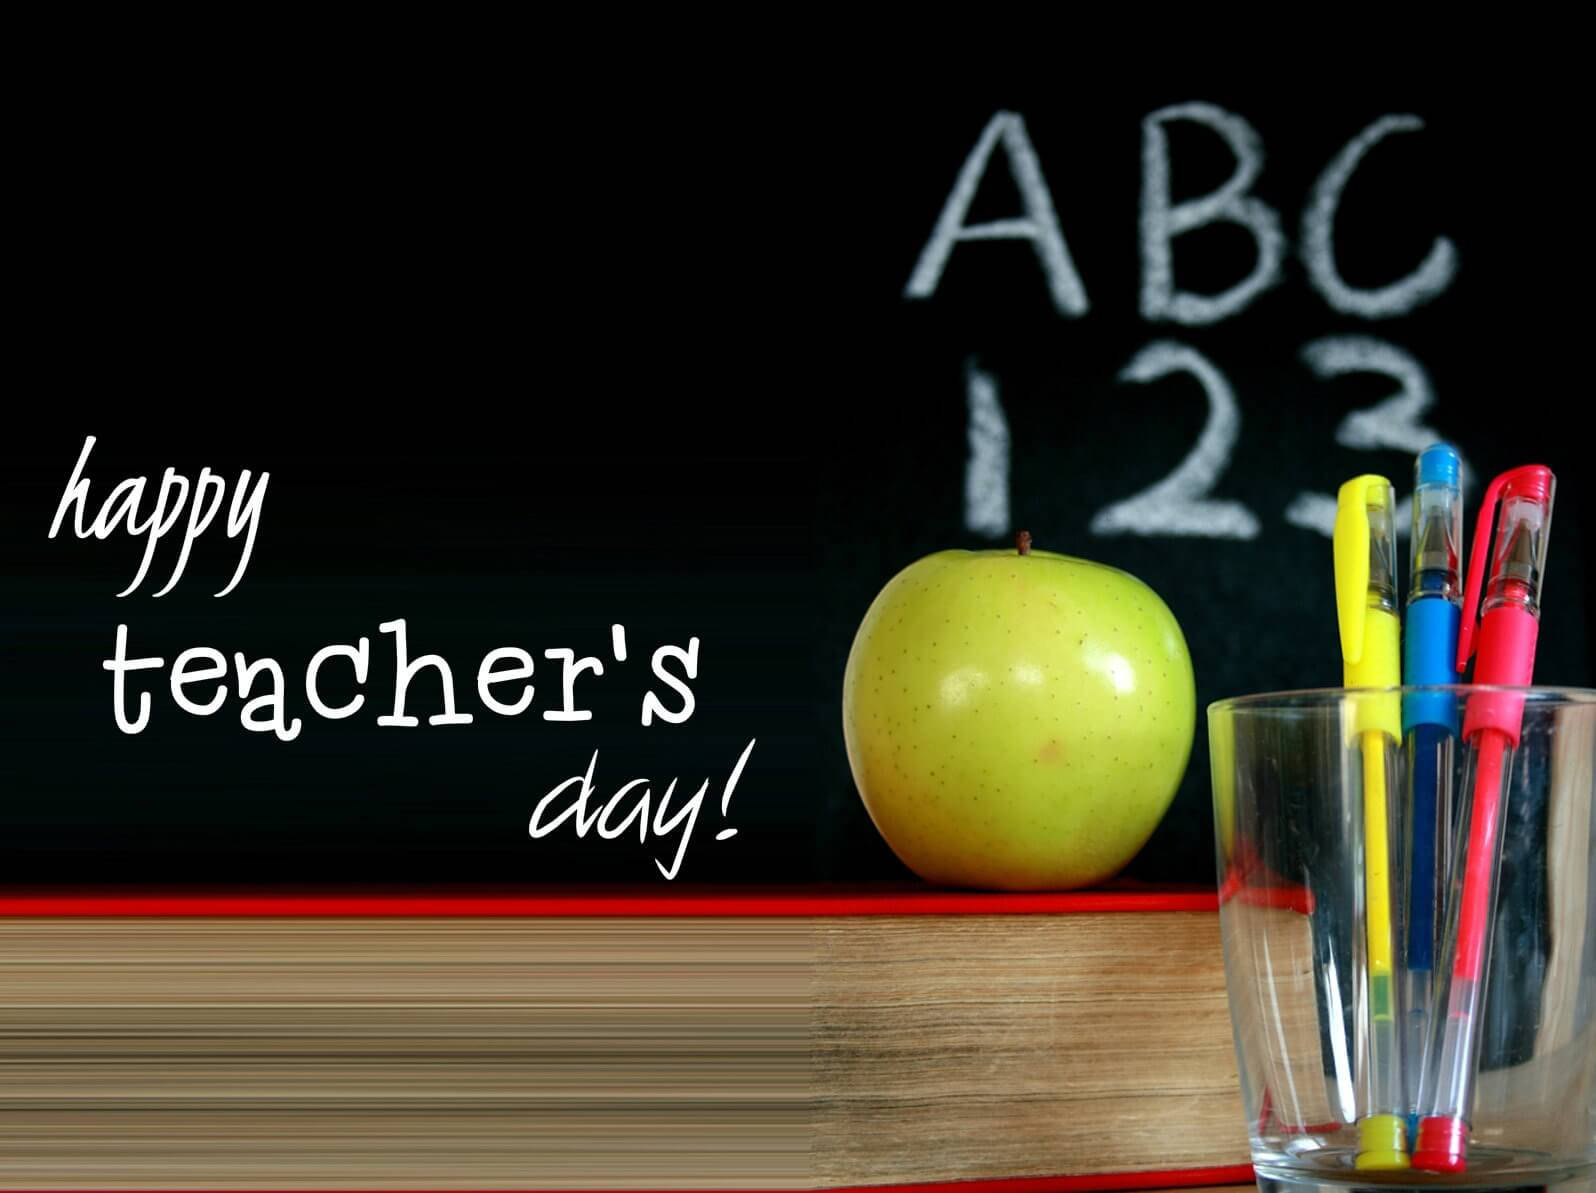 Happy Teachers' Day Apple Pens Background